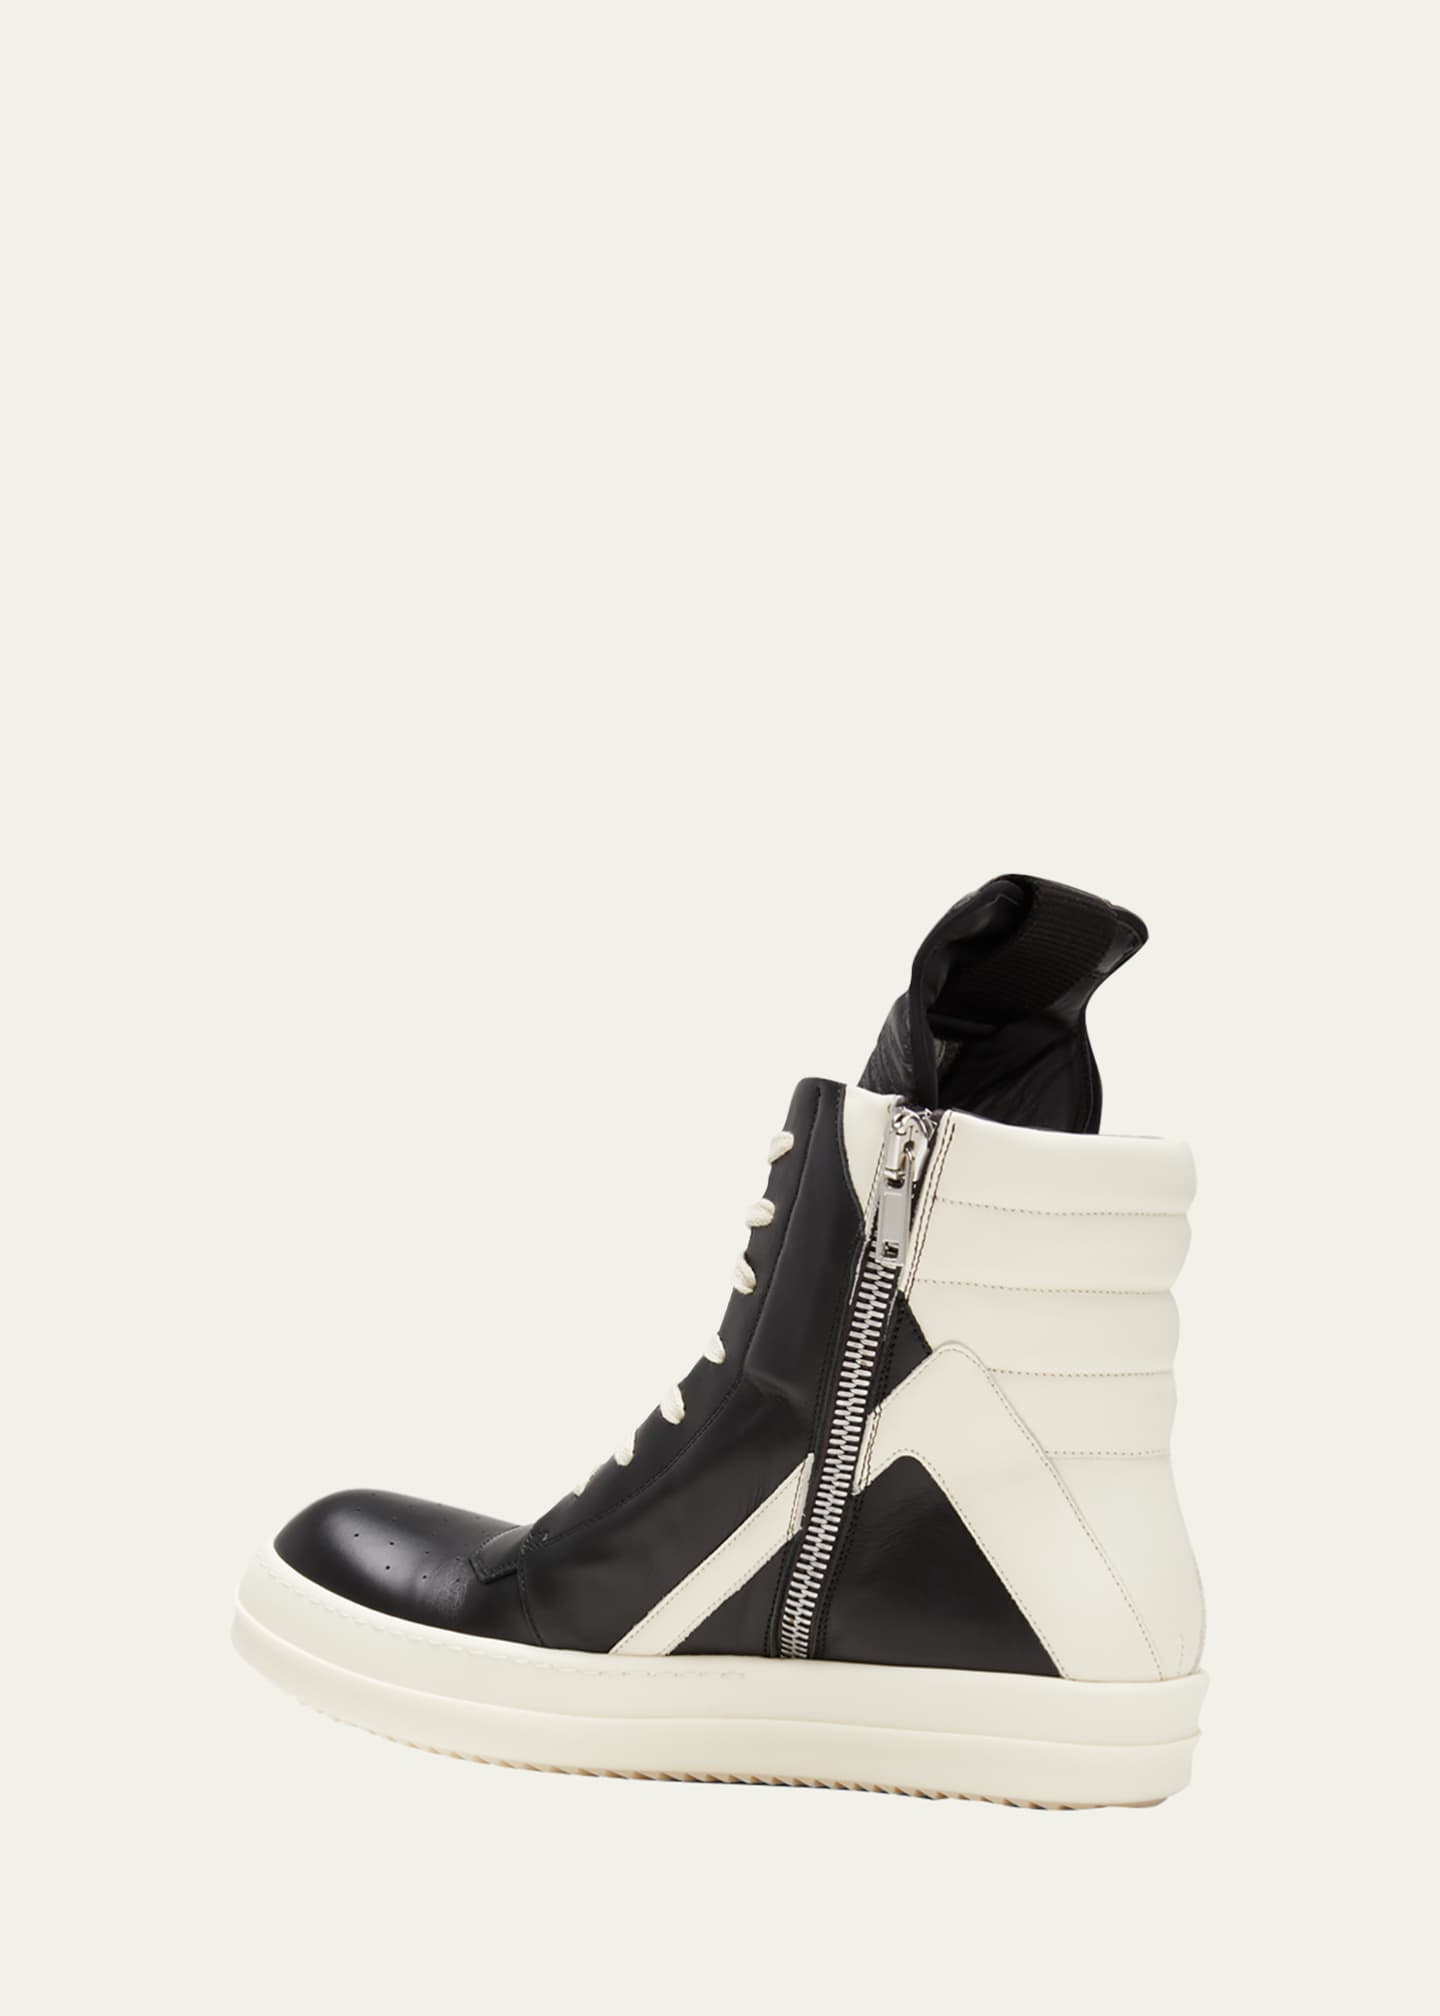 abort Senatet Opdage Rick Owens Men's Geobasket Bicolor Leather High-Top Sneakers - Bergdorf  Goodman